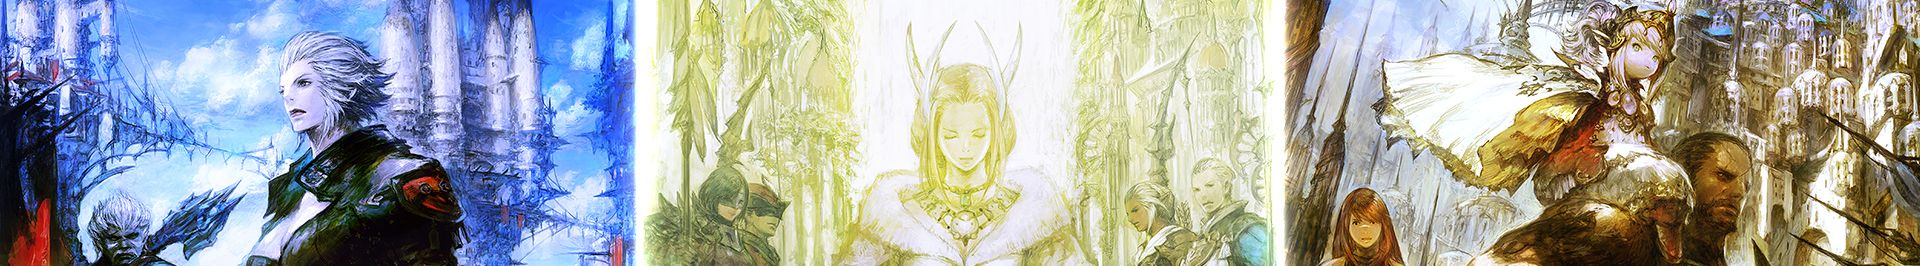 Final Fantasy 14 A Realm Reborn key artwork strip of the three main nations